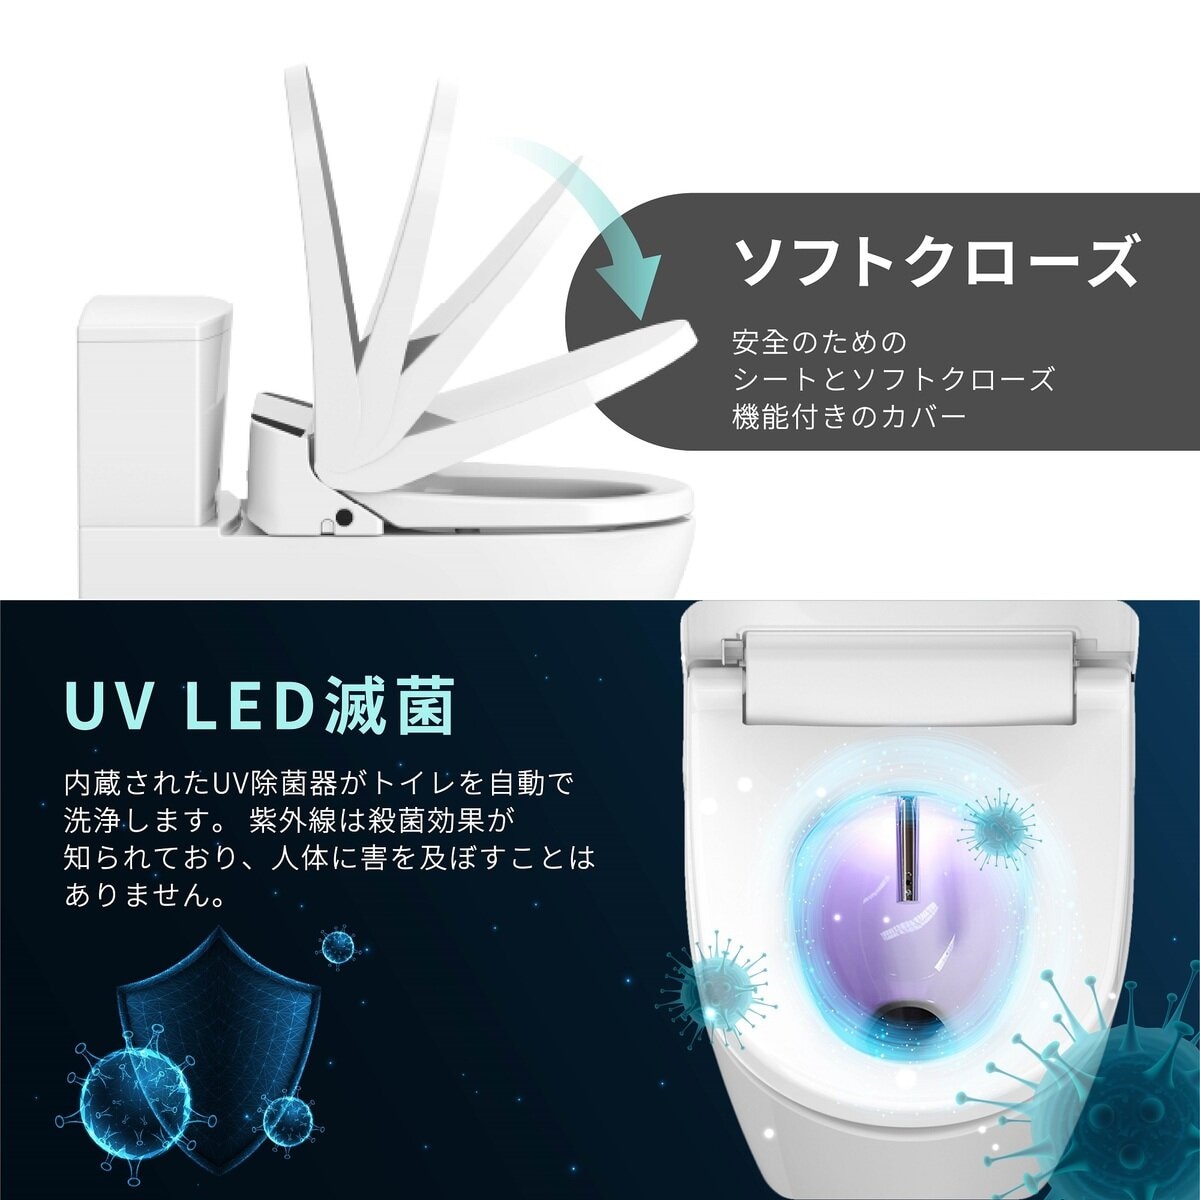 VOVO STYLEMENT 温水洗浄便座 UV LED照明 リモコン付き (VB-6000SE)